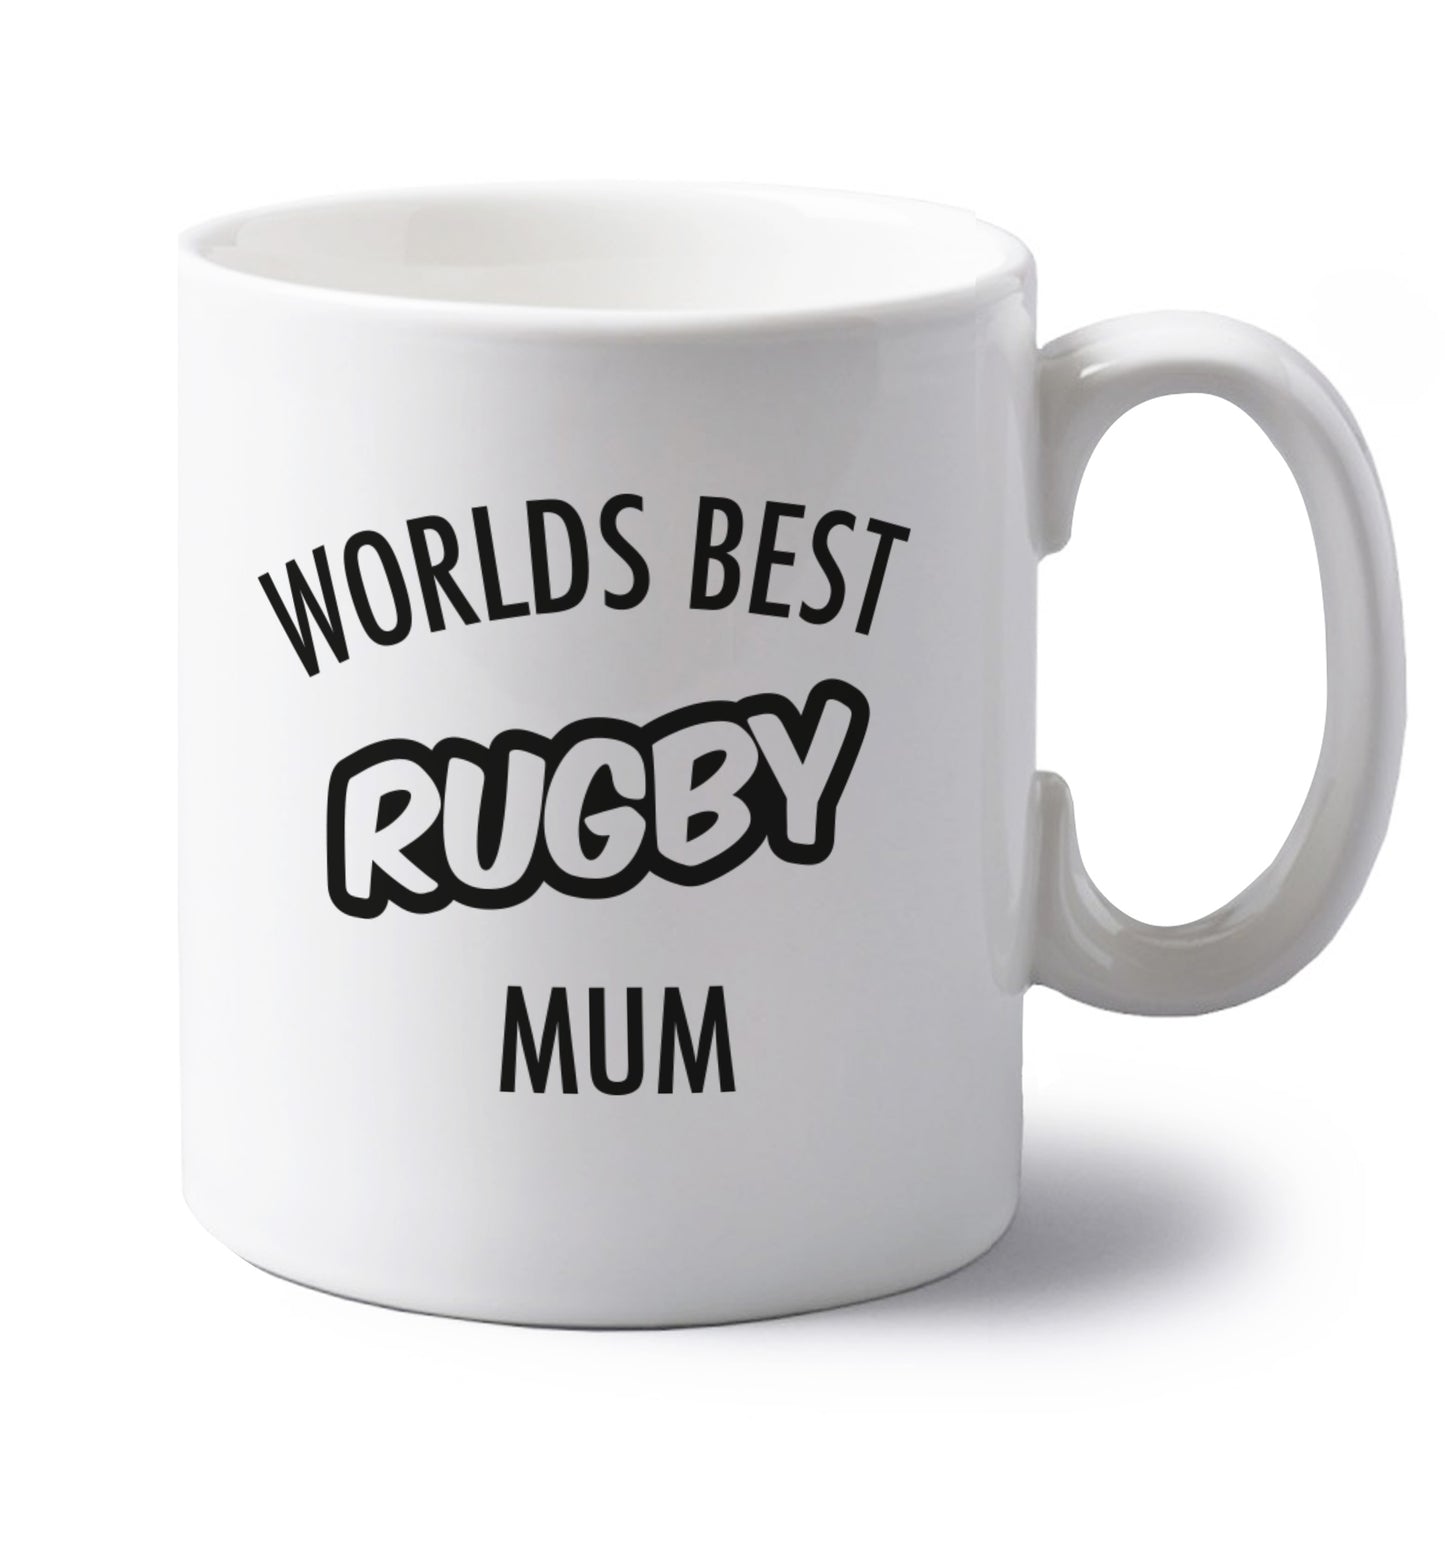 Worlds best rugby mum left handed white ceramic mug 